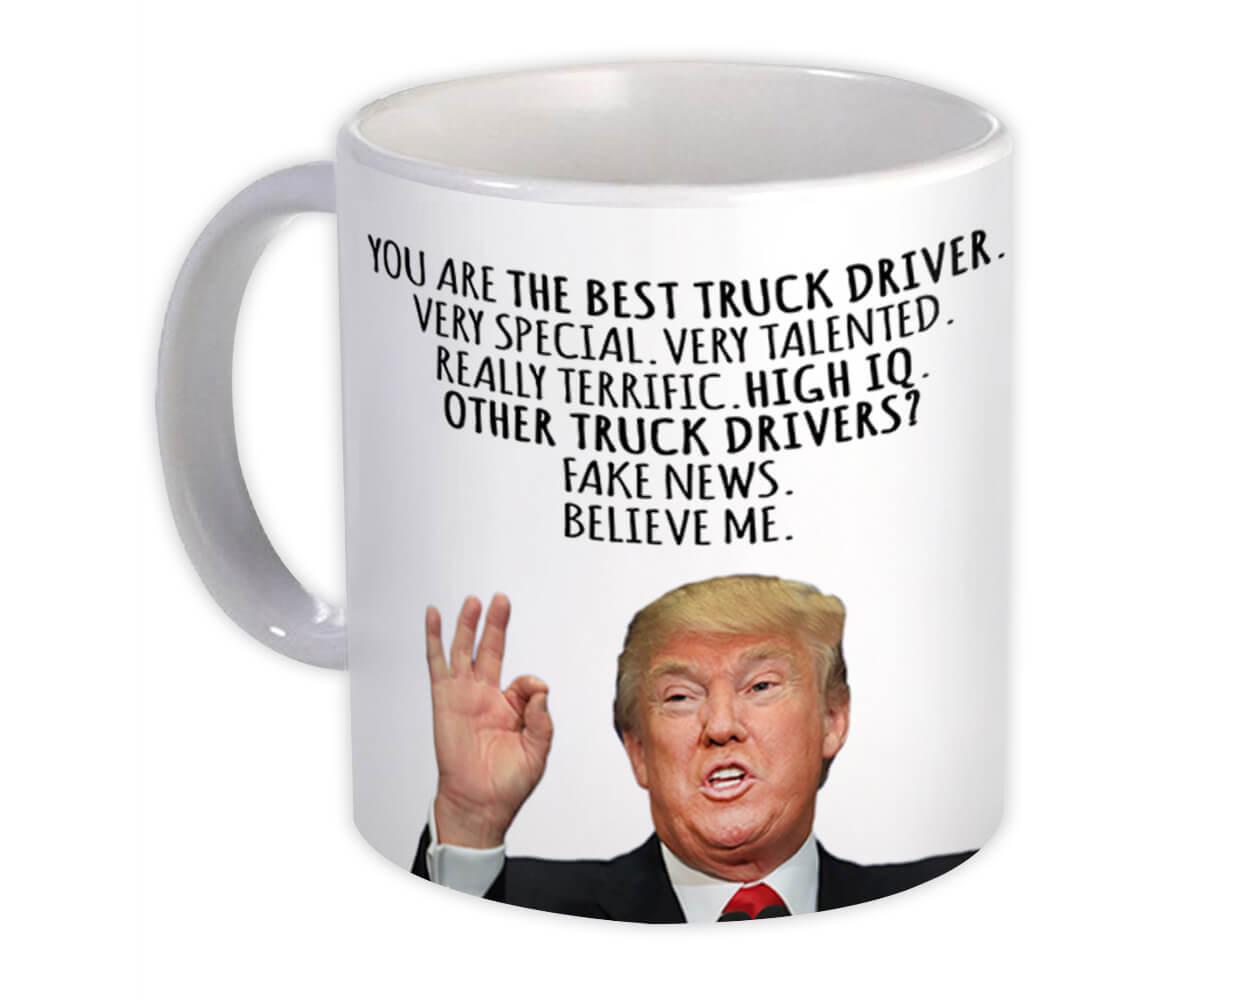 Trump Weightlifter Mug For Weightlifter Gifts For Weightlifter Coffee Mug  Fun